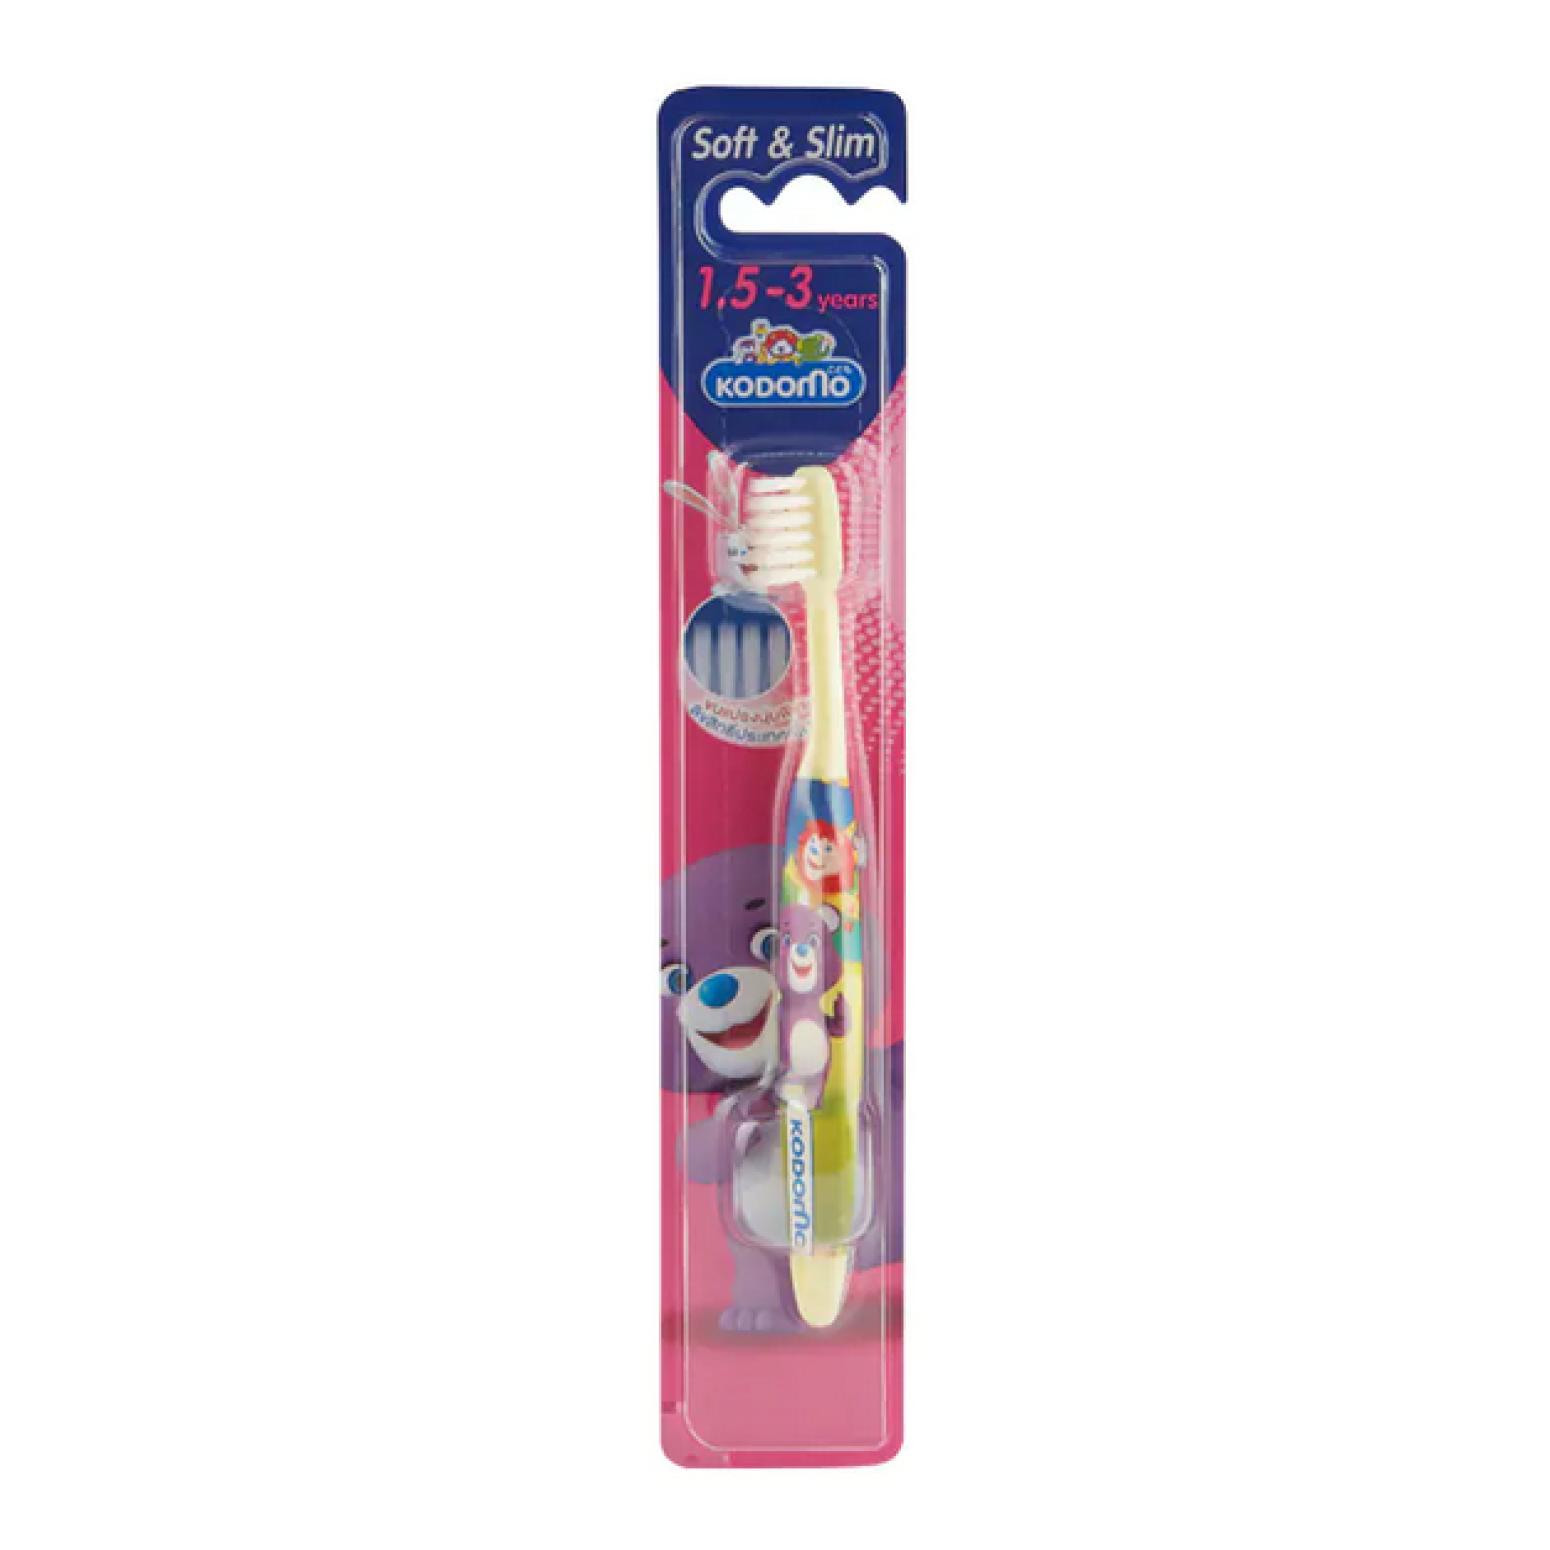 Kodomo Toothbrush Soft and Slim Age 1.5 to 3years